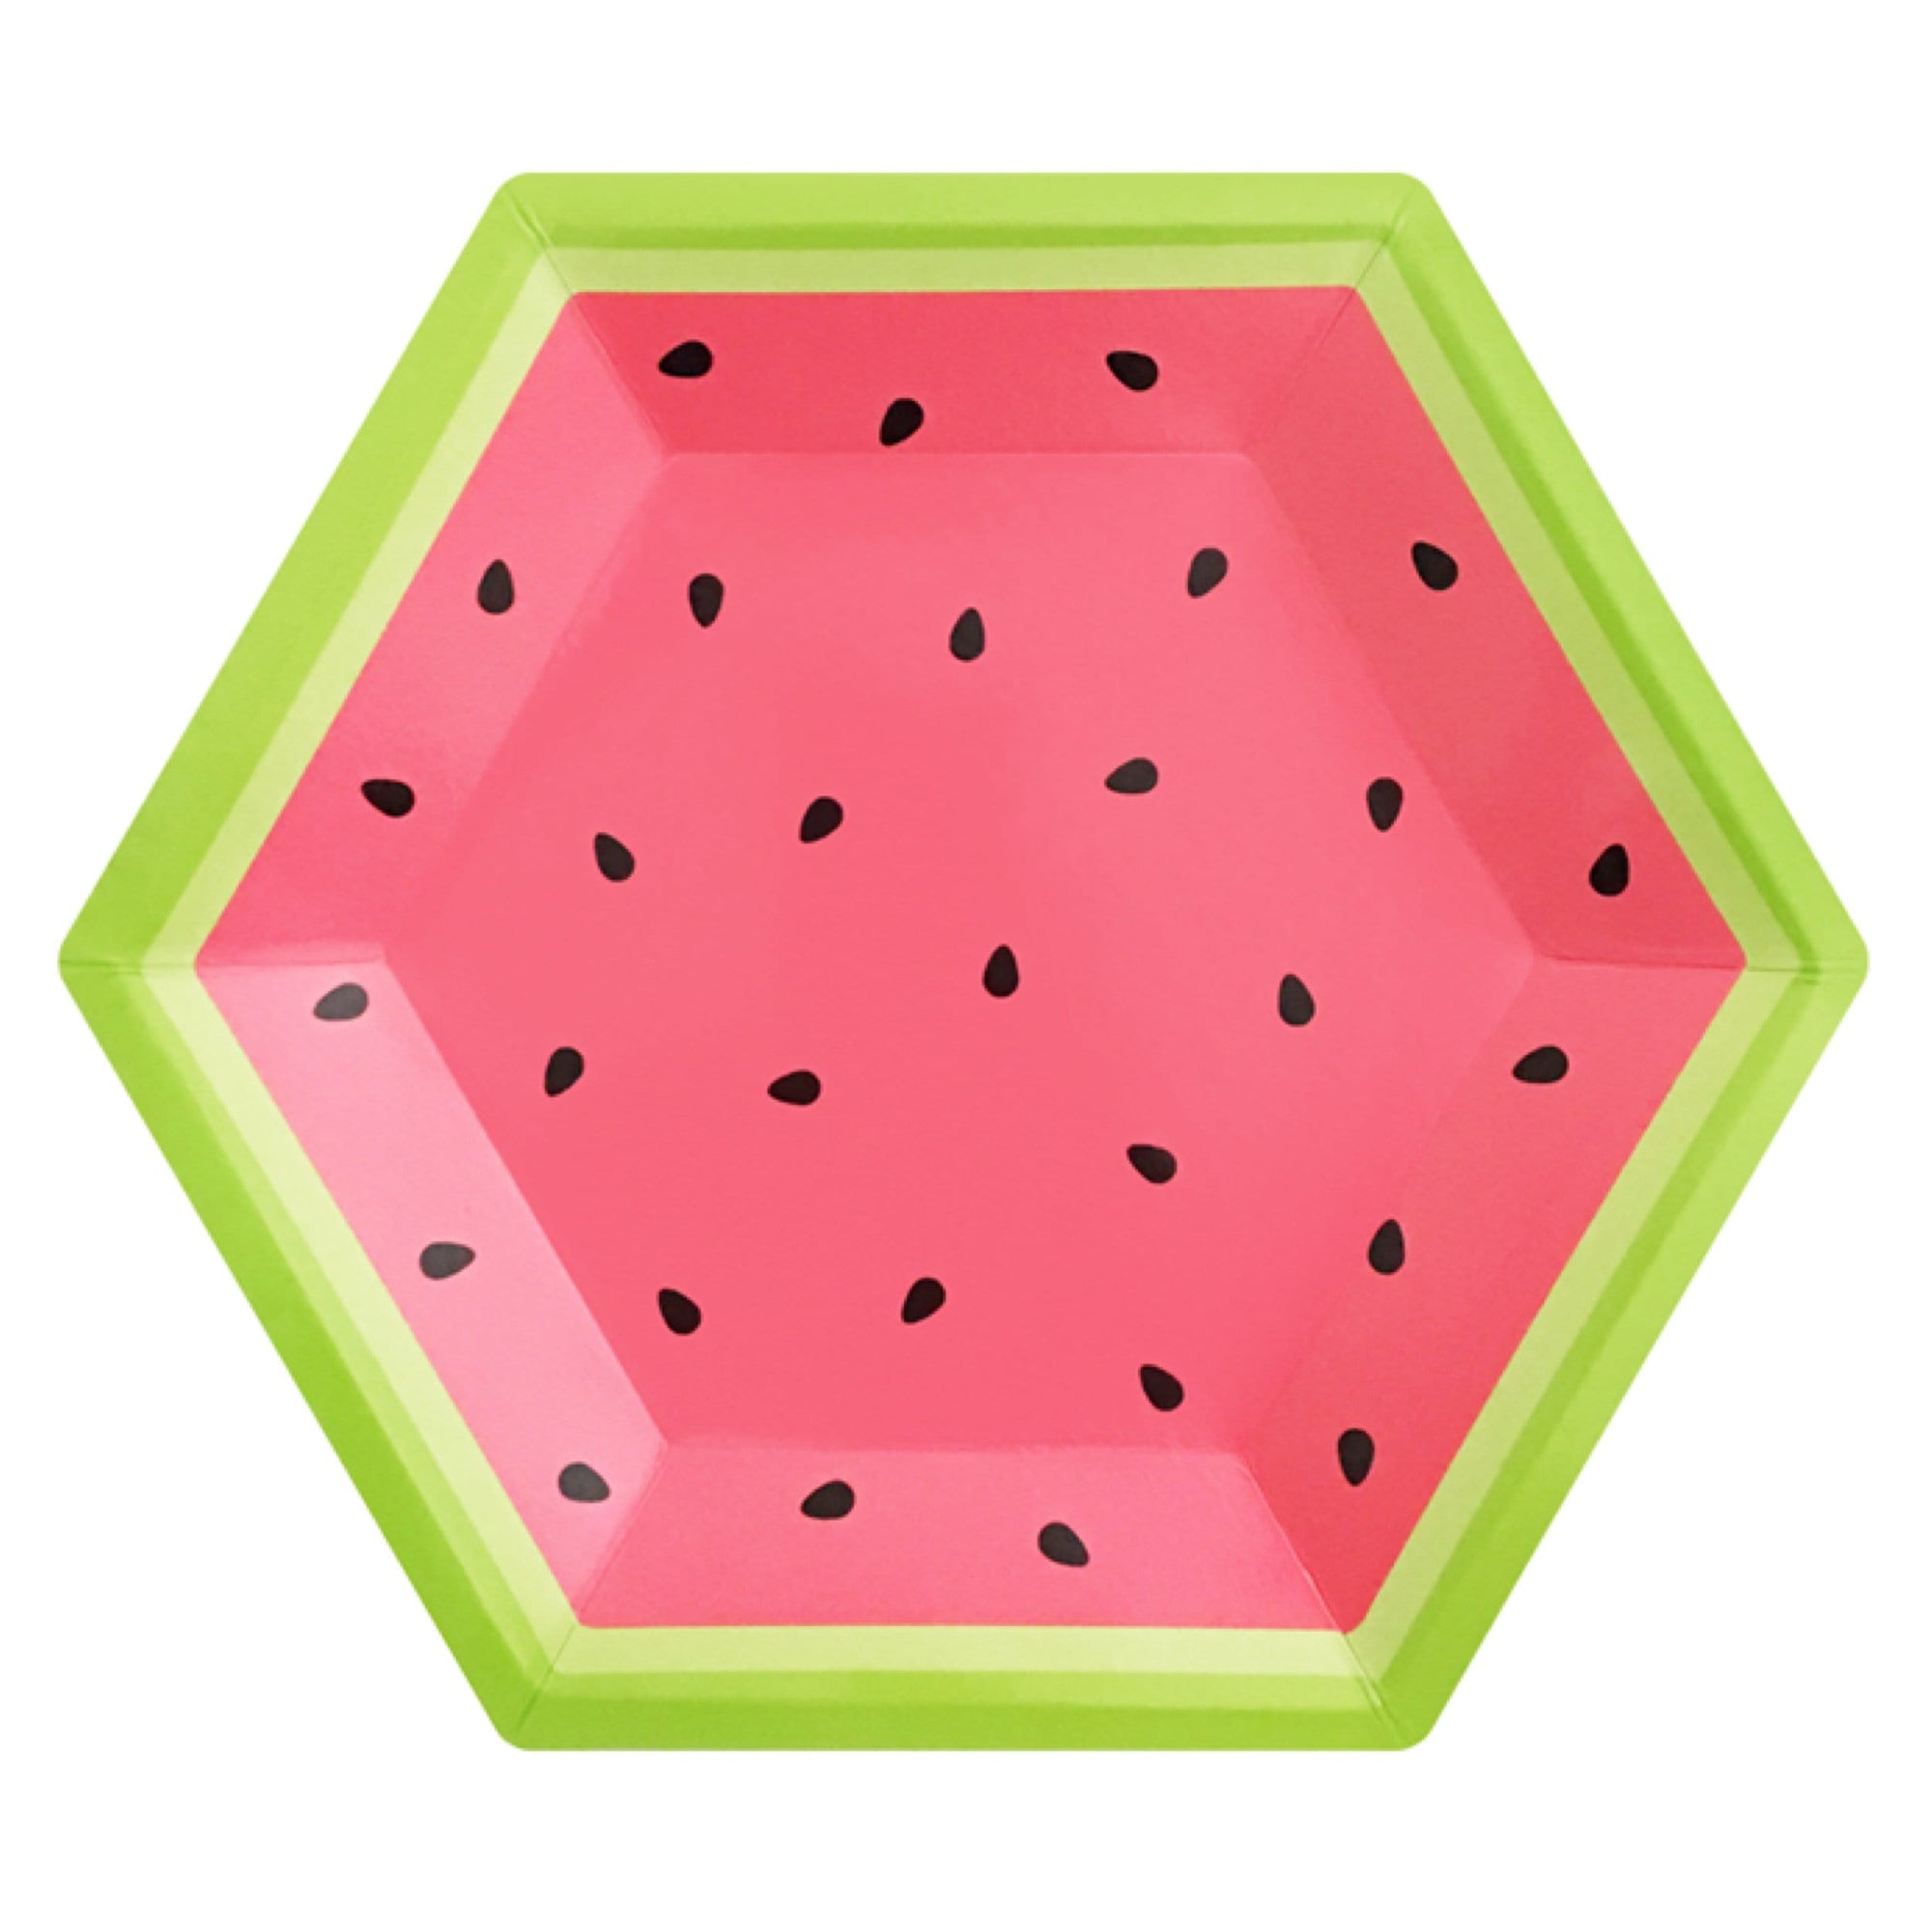 Watermelon Hexagon Plates - Large